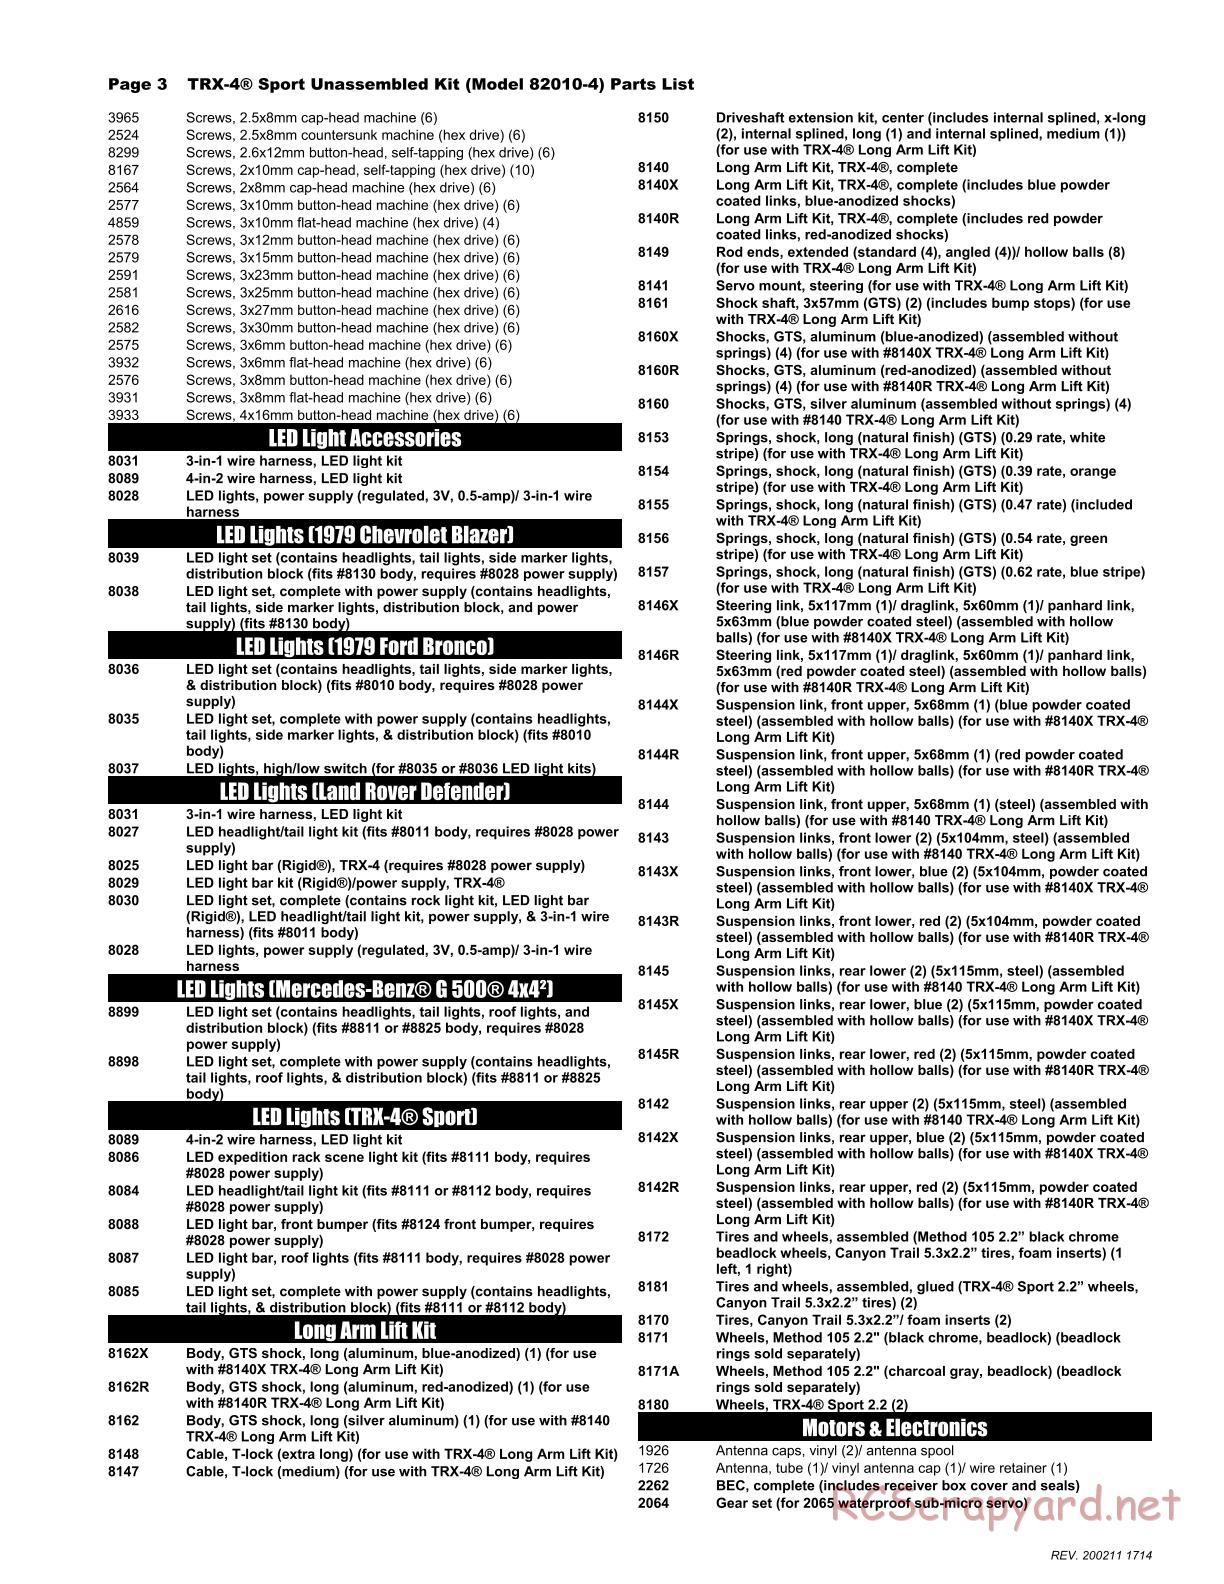 Traxxas - TRX-4 Sport - Parts List - Page 3